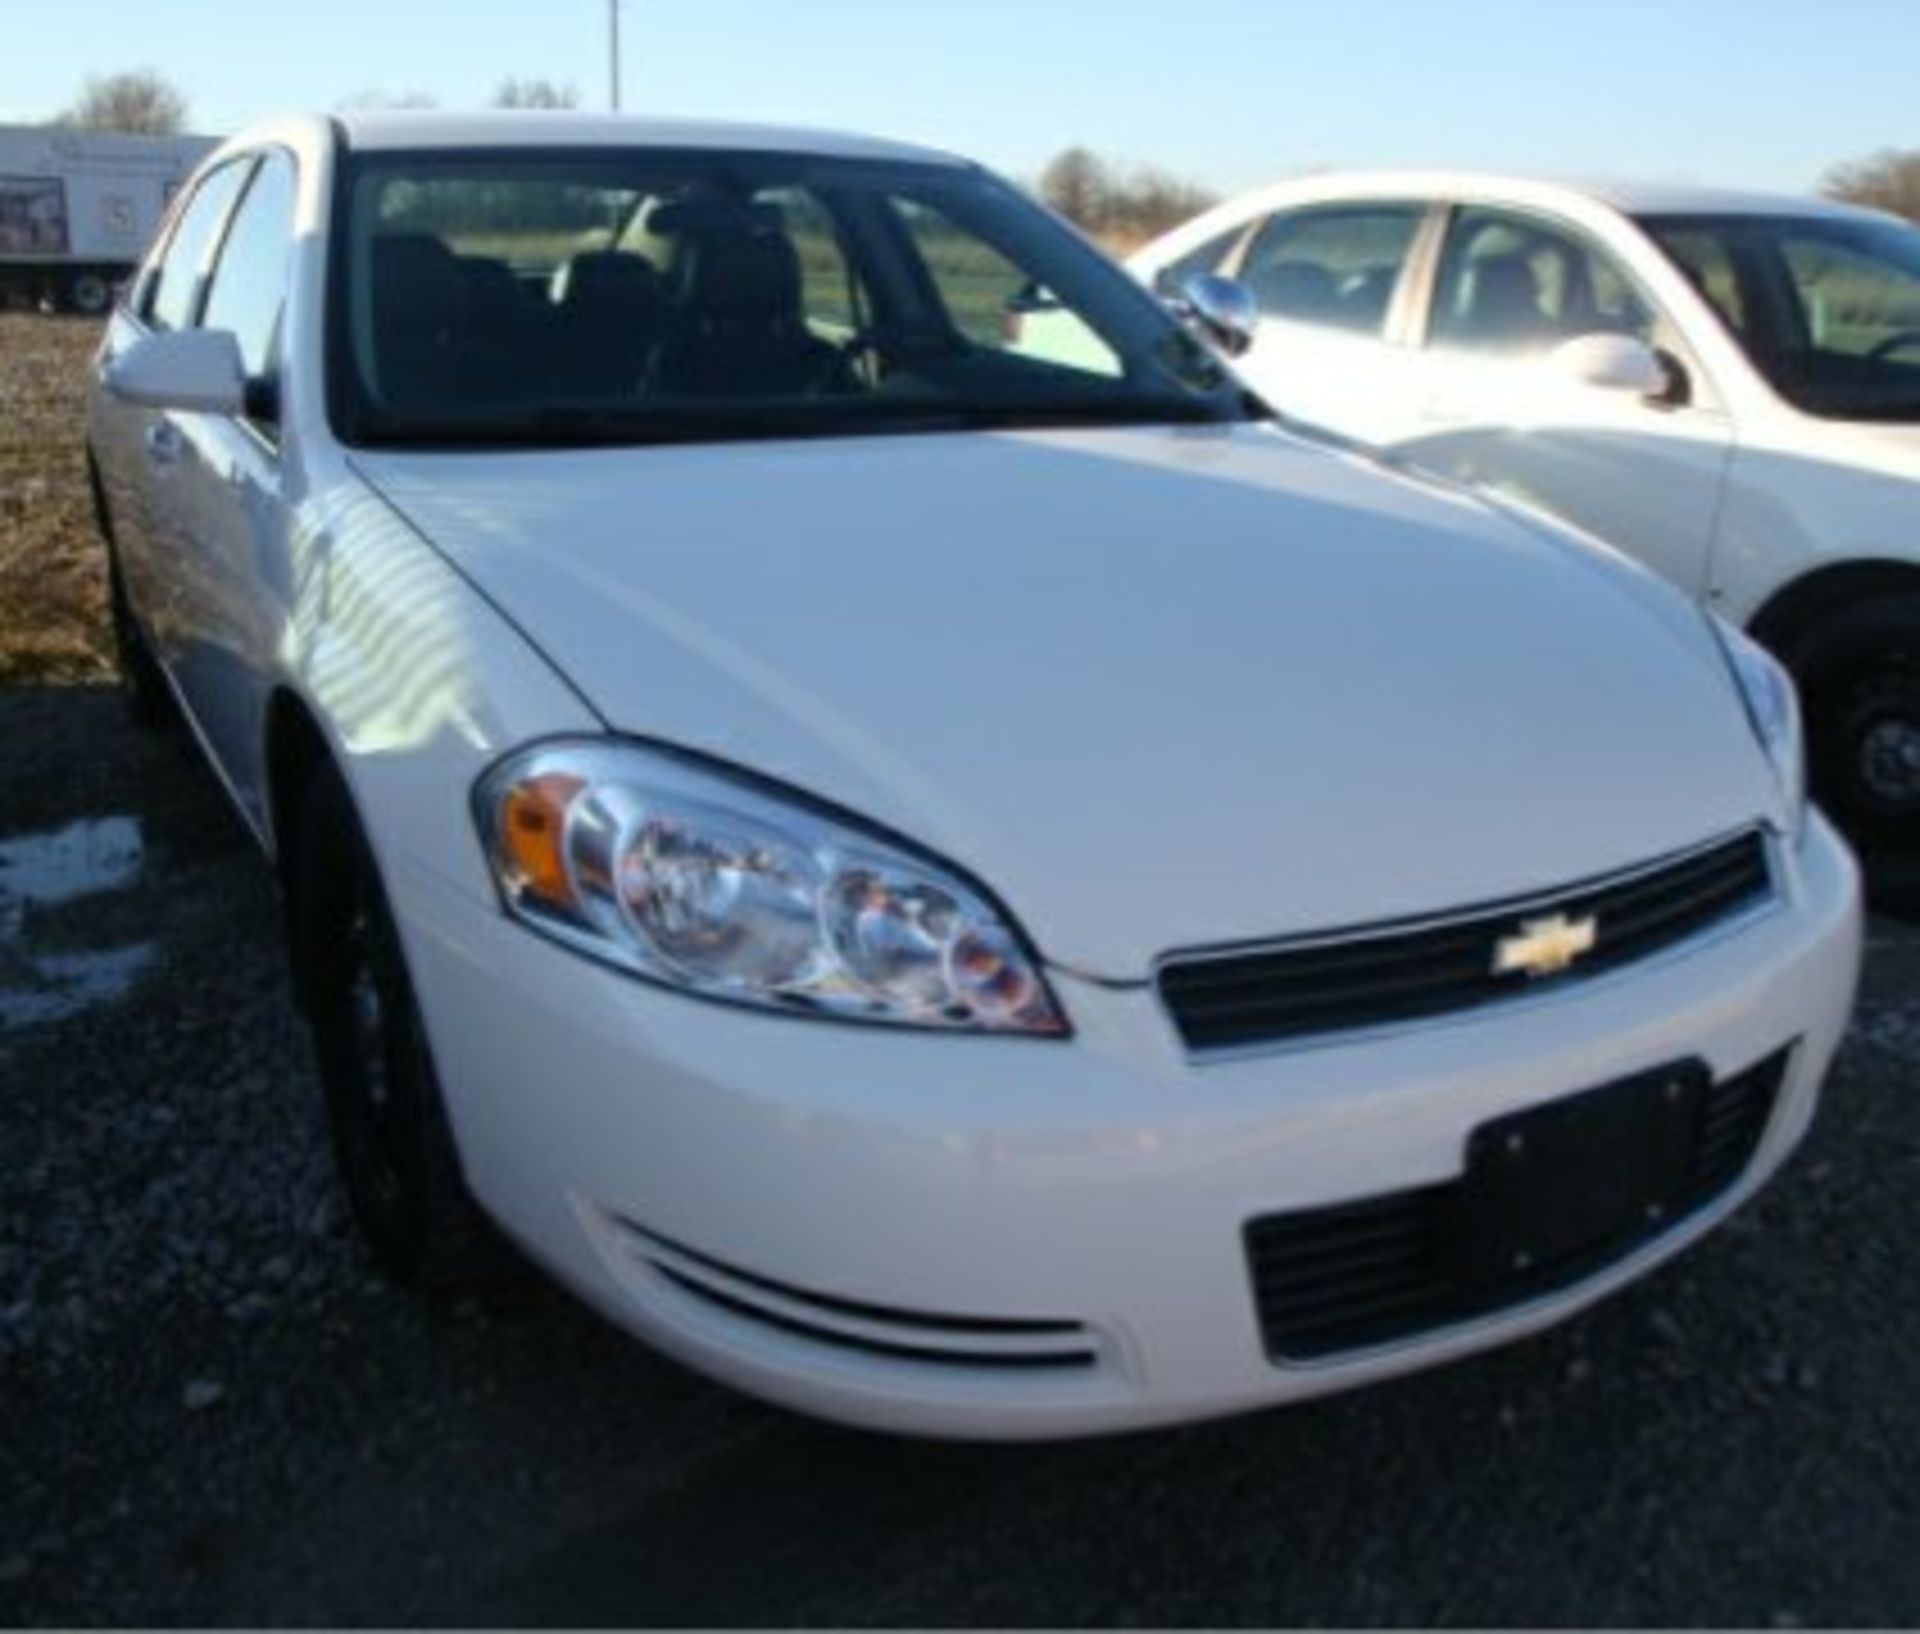 (Lot 4b) 2008 Chevrolet Impala 4 door, 75,350 miles, 3.9 ltr engine, vin 2G1W5553381373479